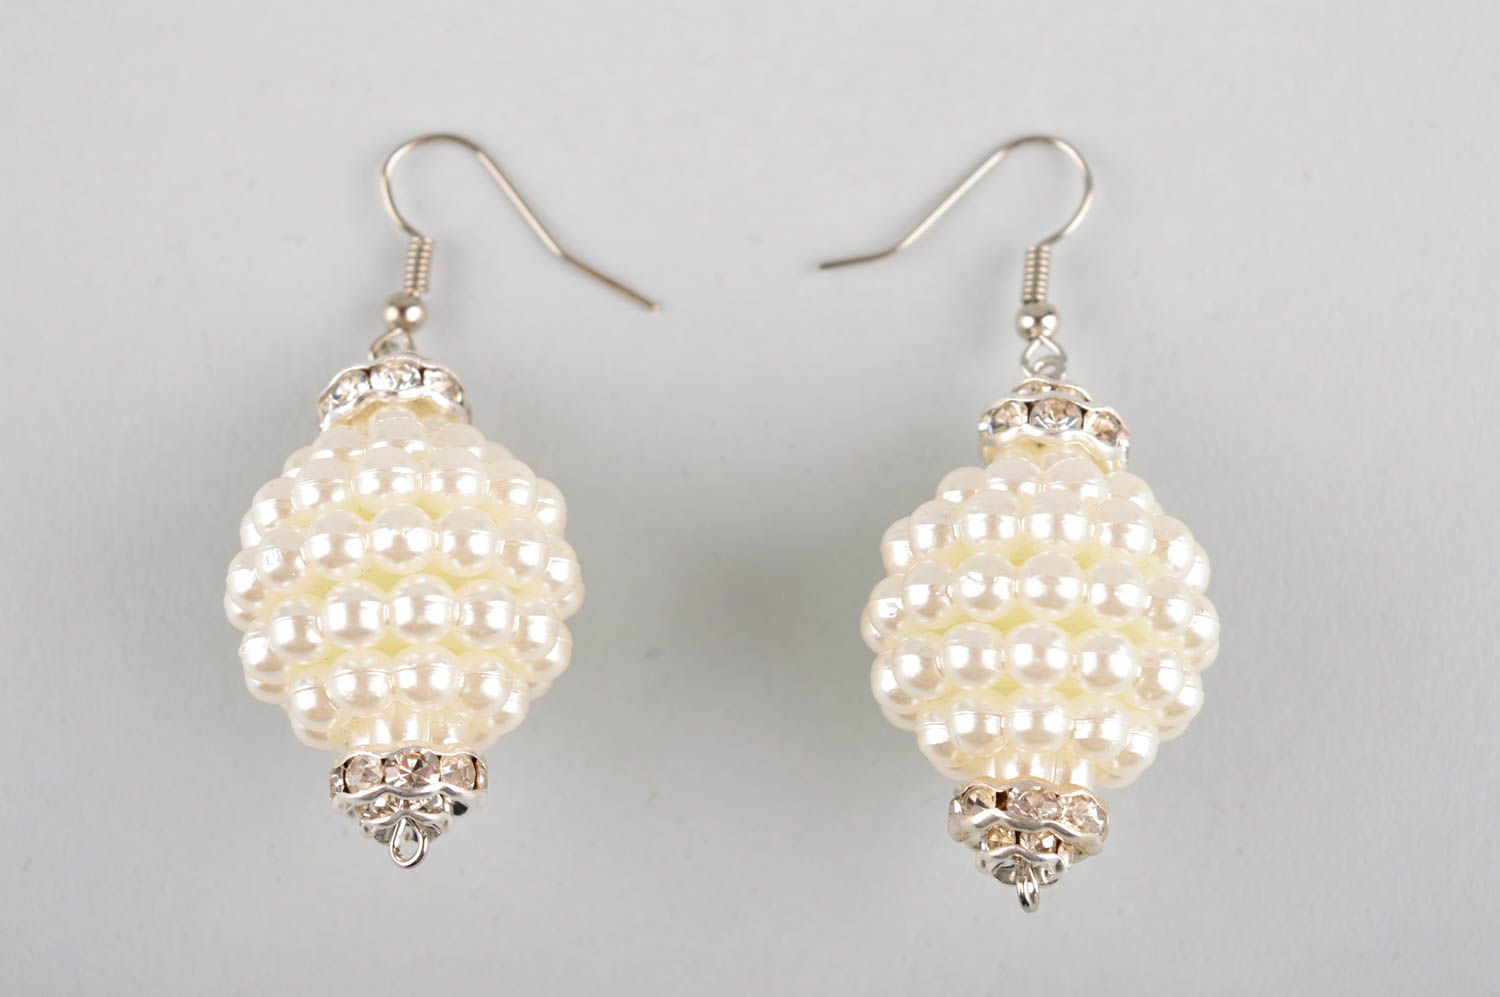 Long beaded earrings handmade earrings with charms fashion jewelry for girls photo 3